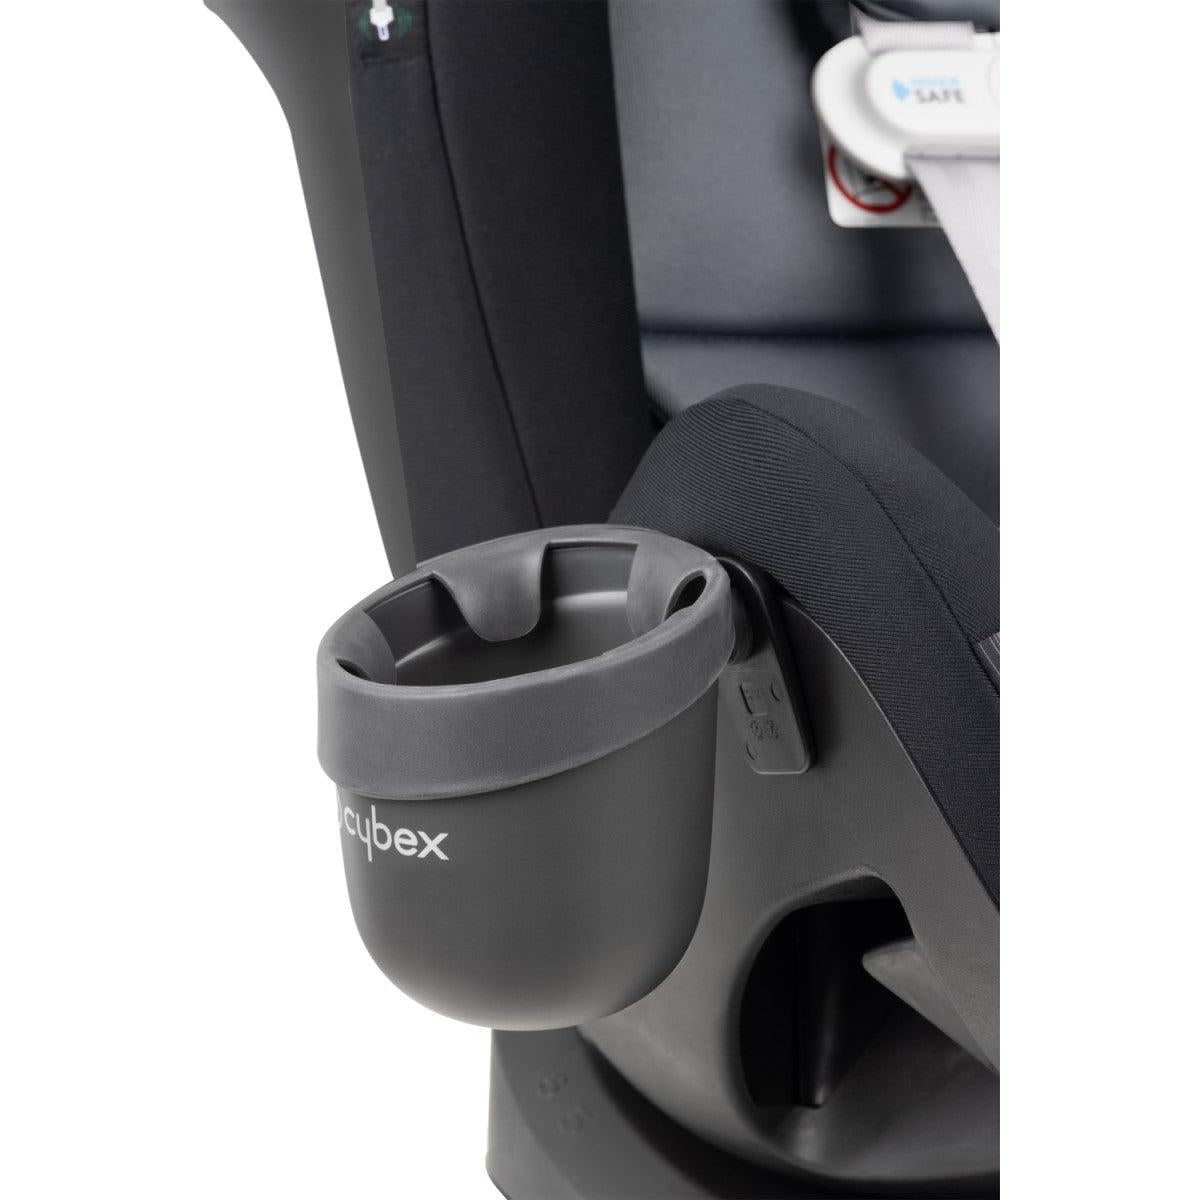 Cybex Car Seat - Pallas G i-Size - Moon Black » Fast Shipping